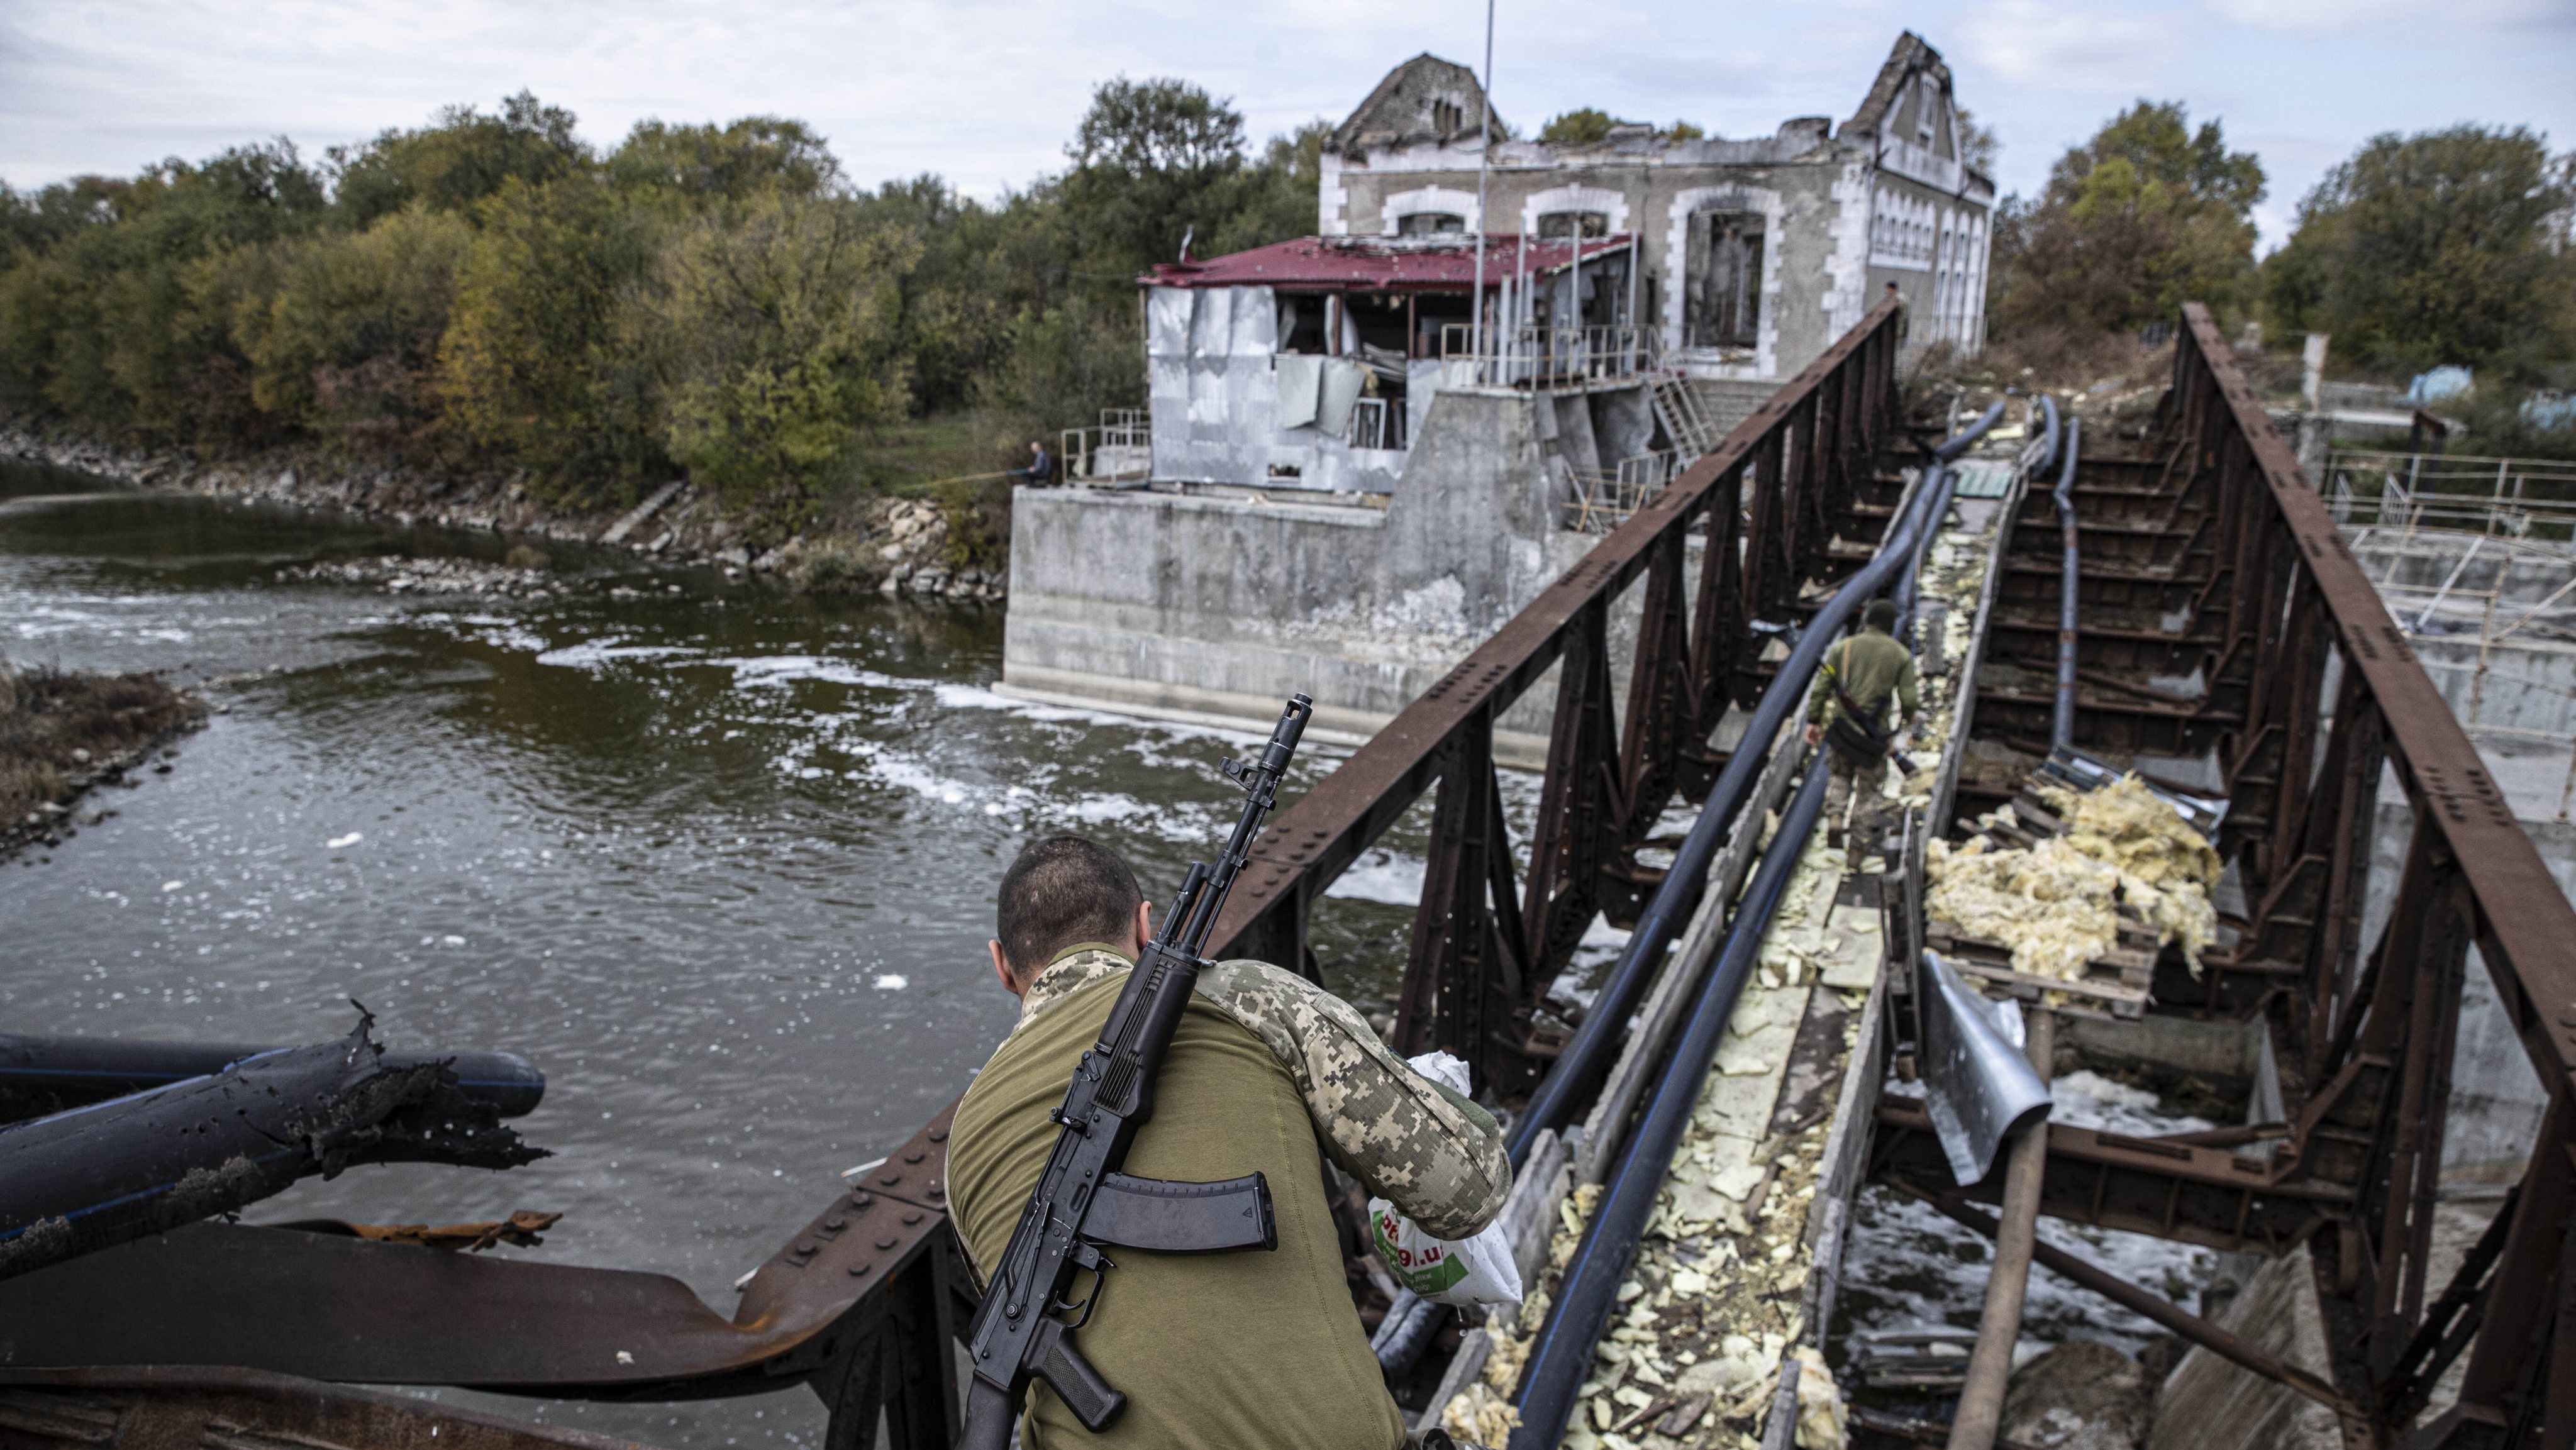 Traces of war in Ukrainian city of Kherson